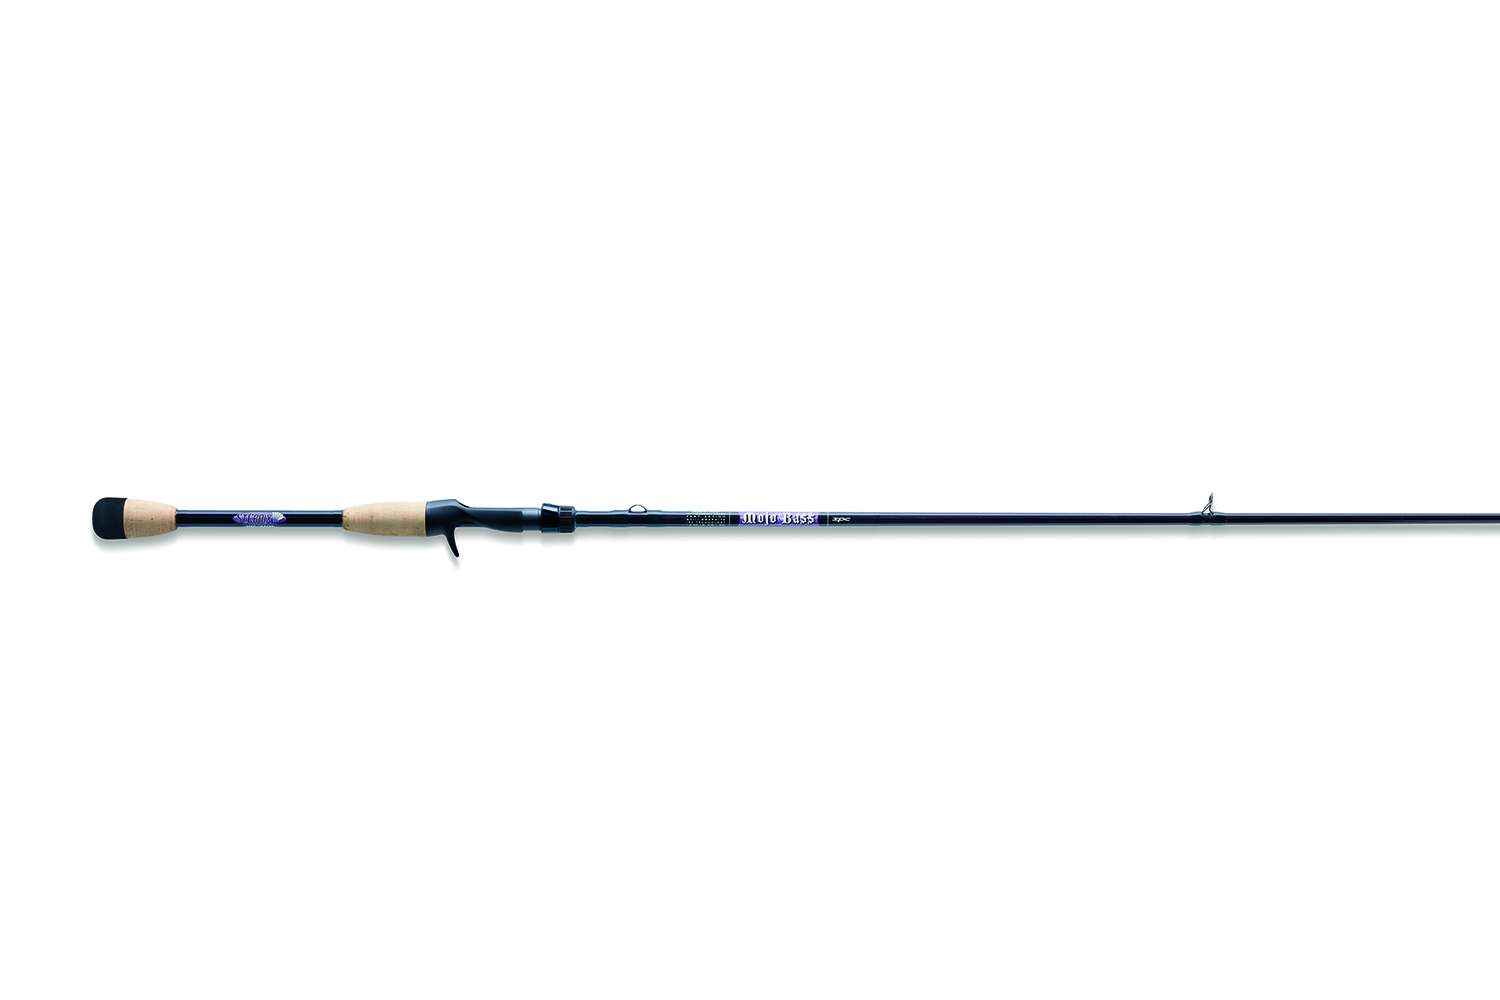 St. Croix Mojo Bass casting rod, $130